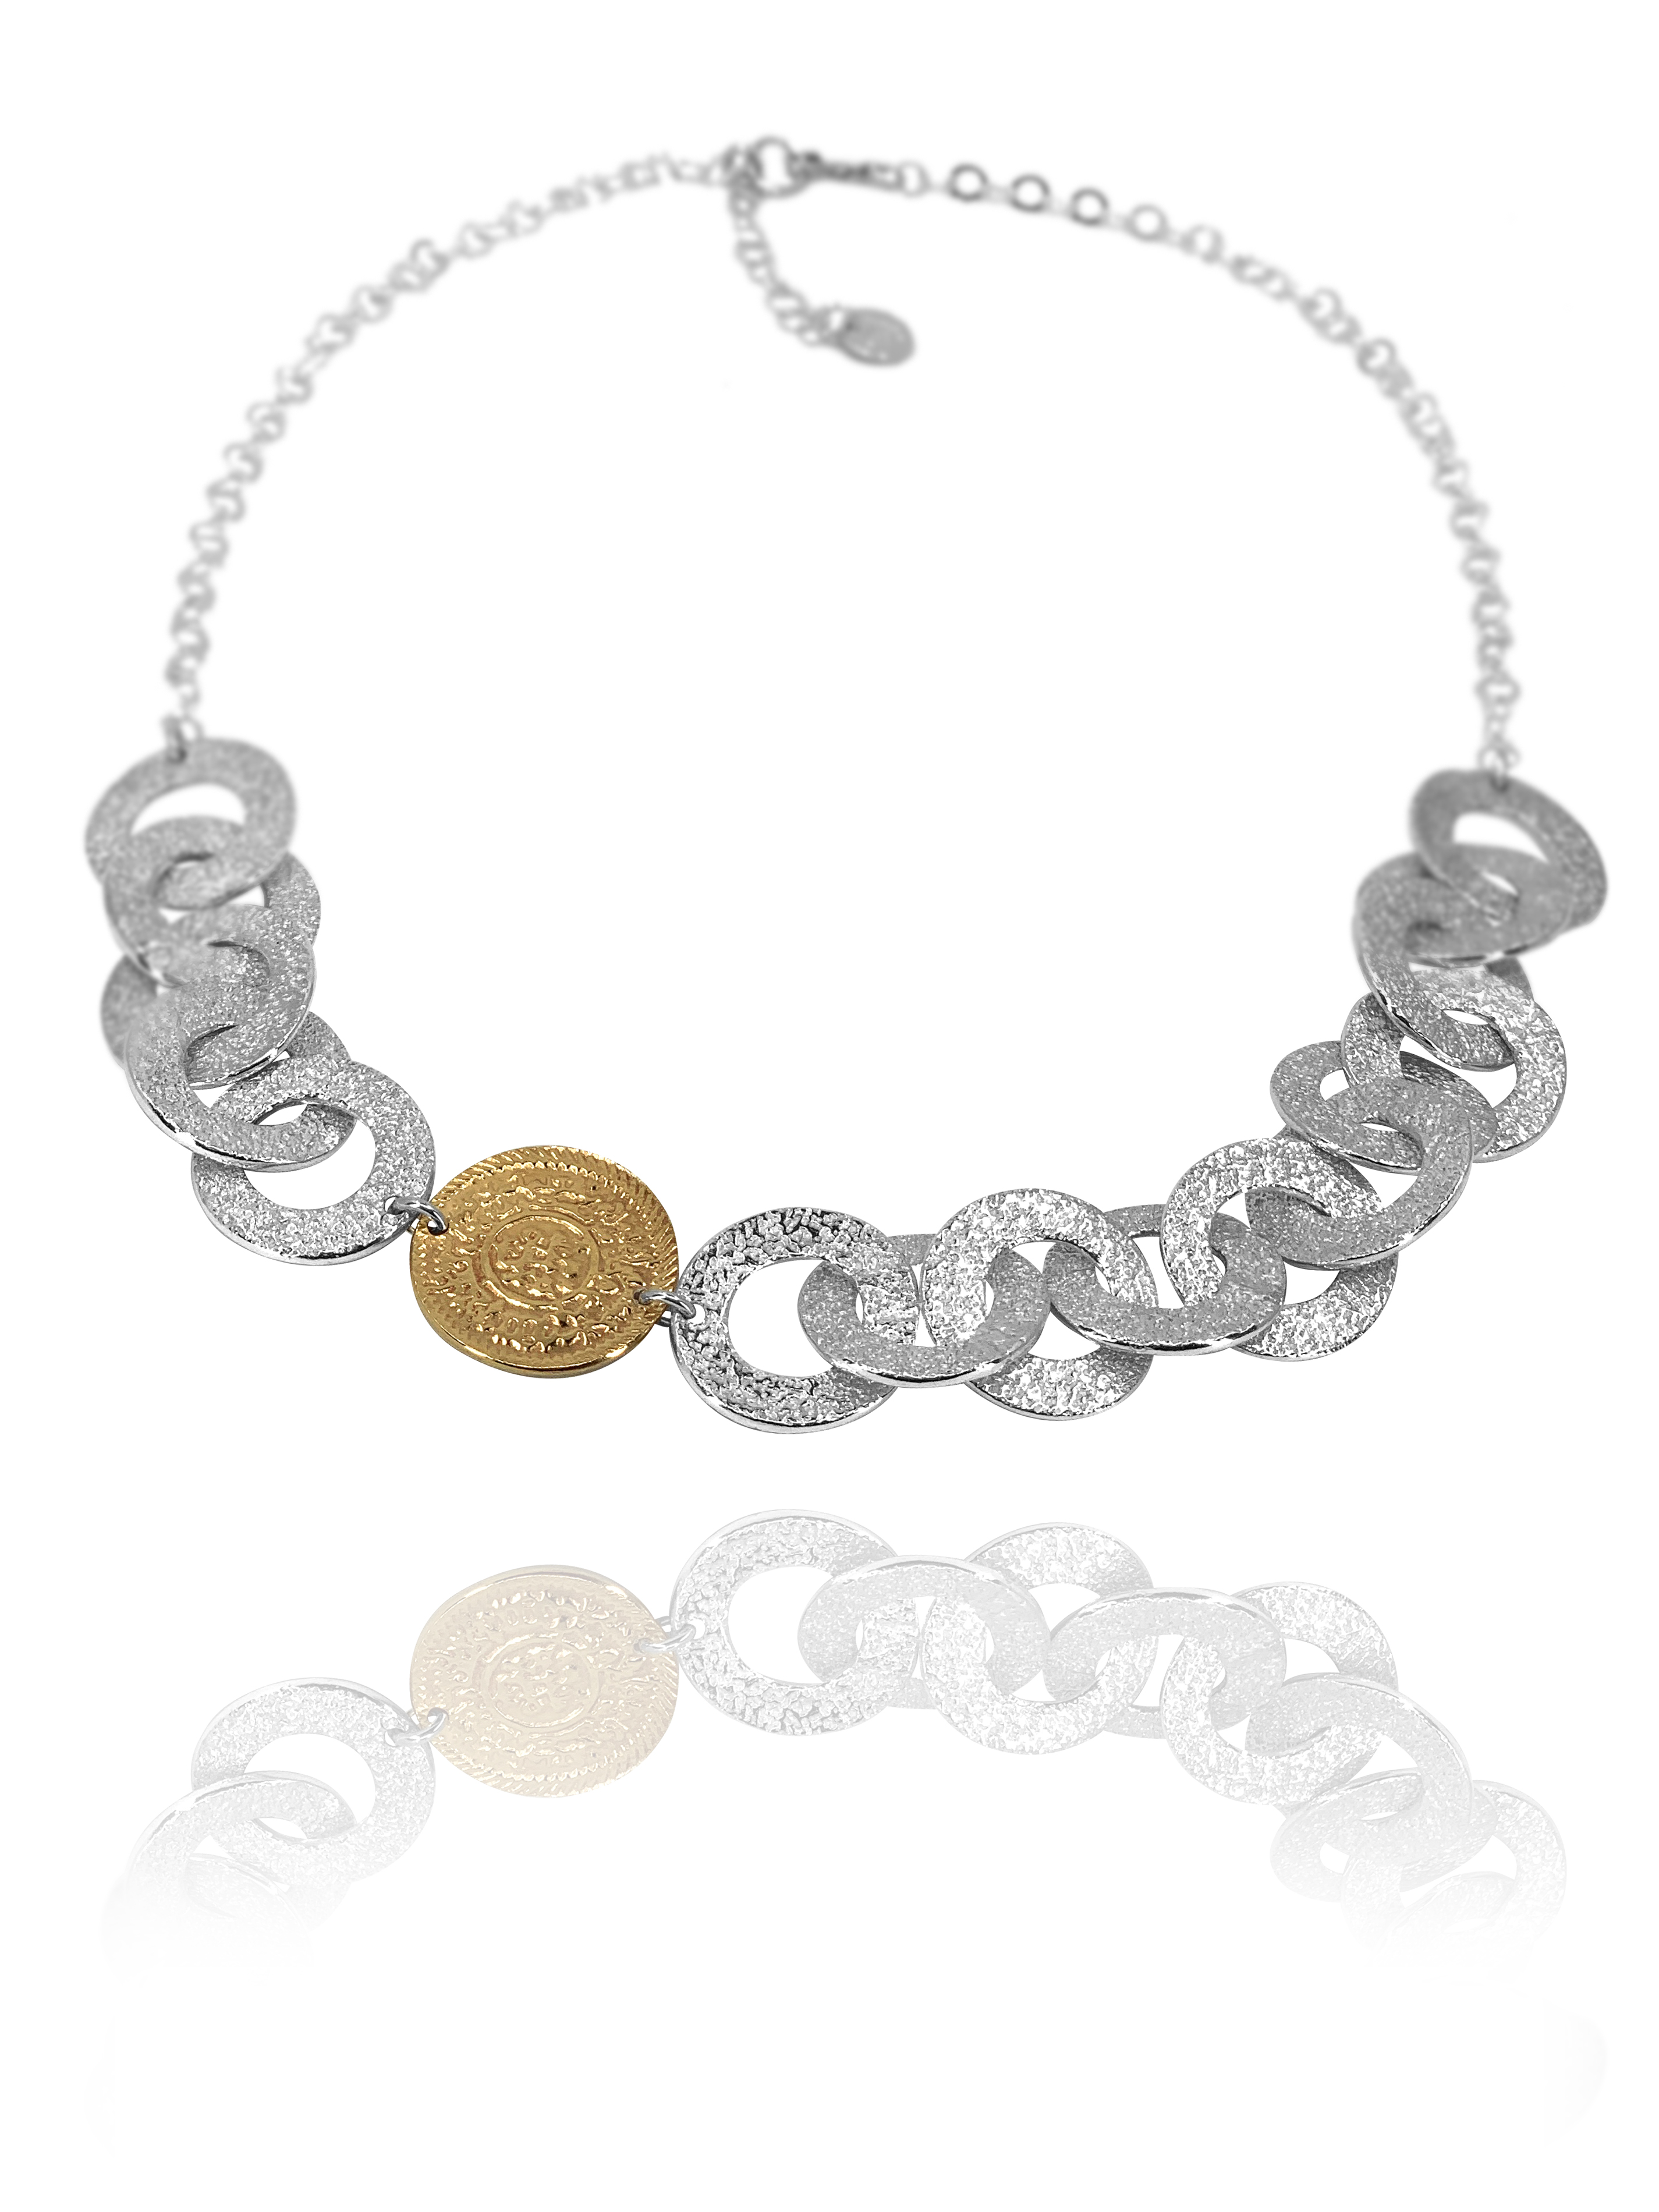 Coin chain necklace silver vermeil